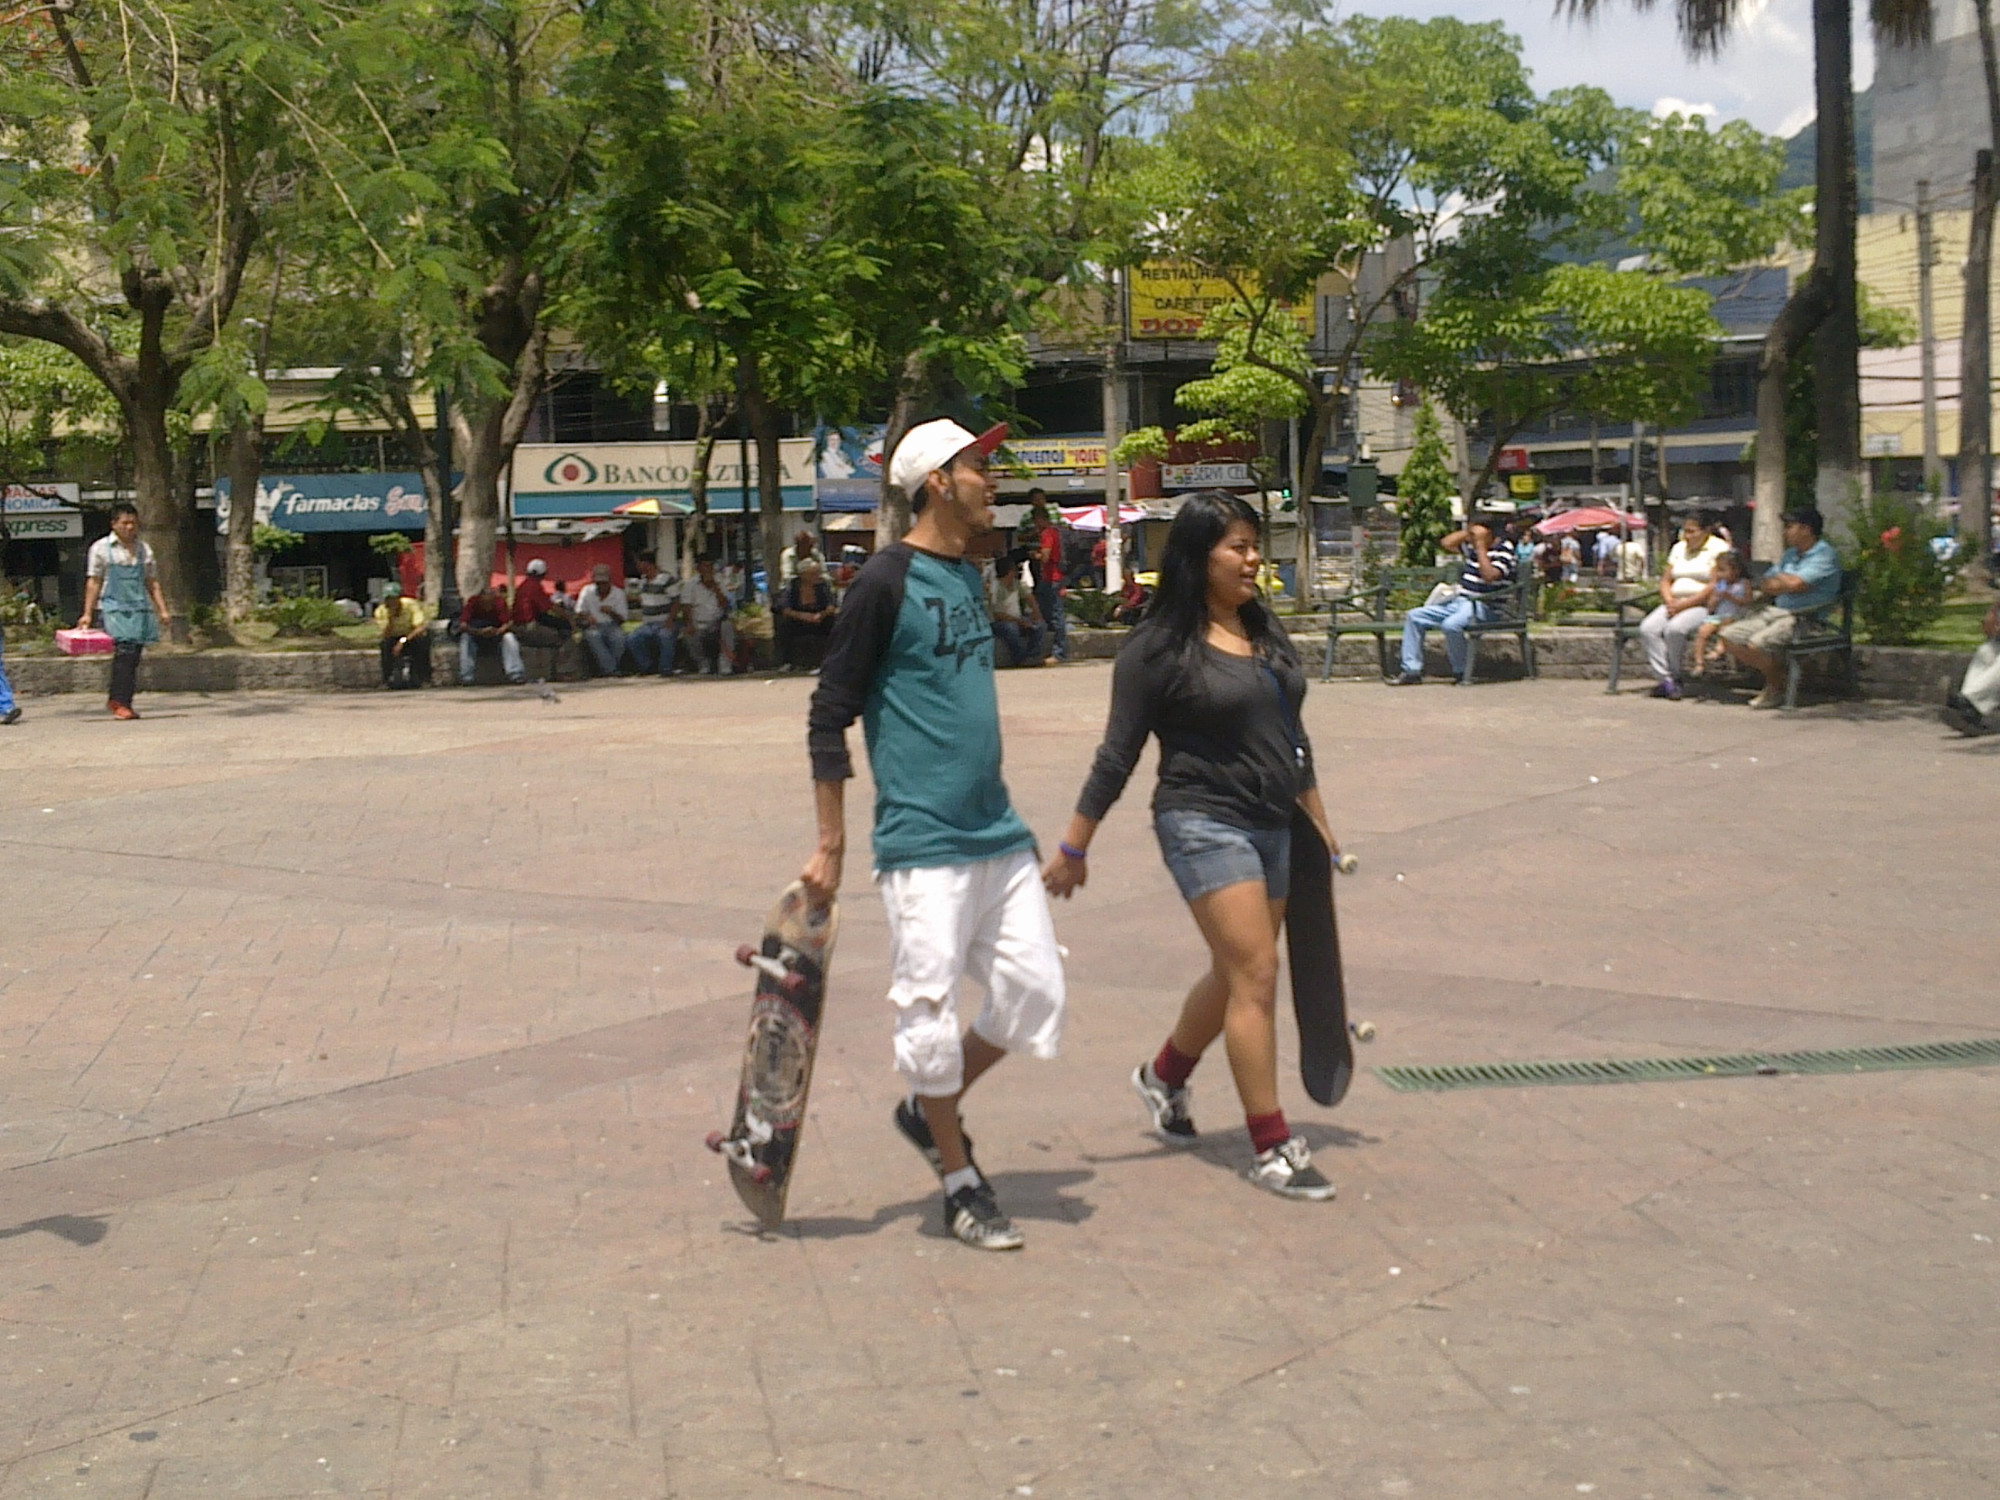 Salvador skateboarders